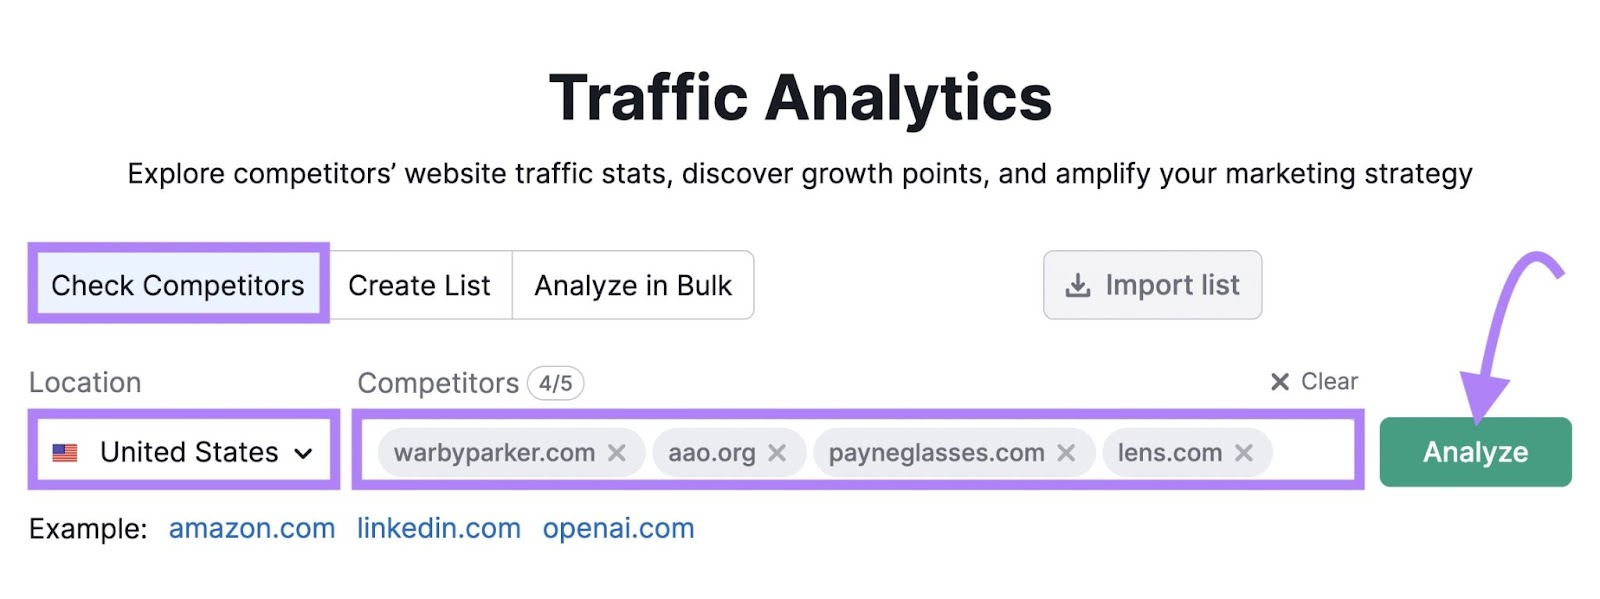 "warbyparker.com" " aao.org" "payneglasses.com" and "lens.com" entered into the Traffic Analytics tool search bar